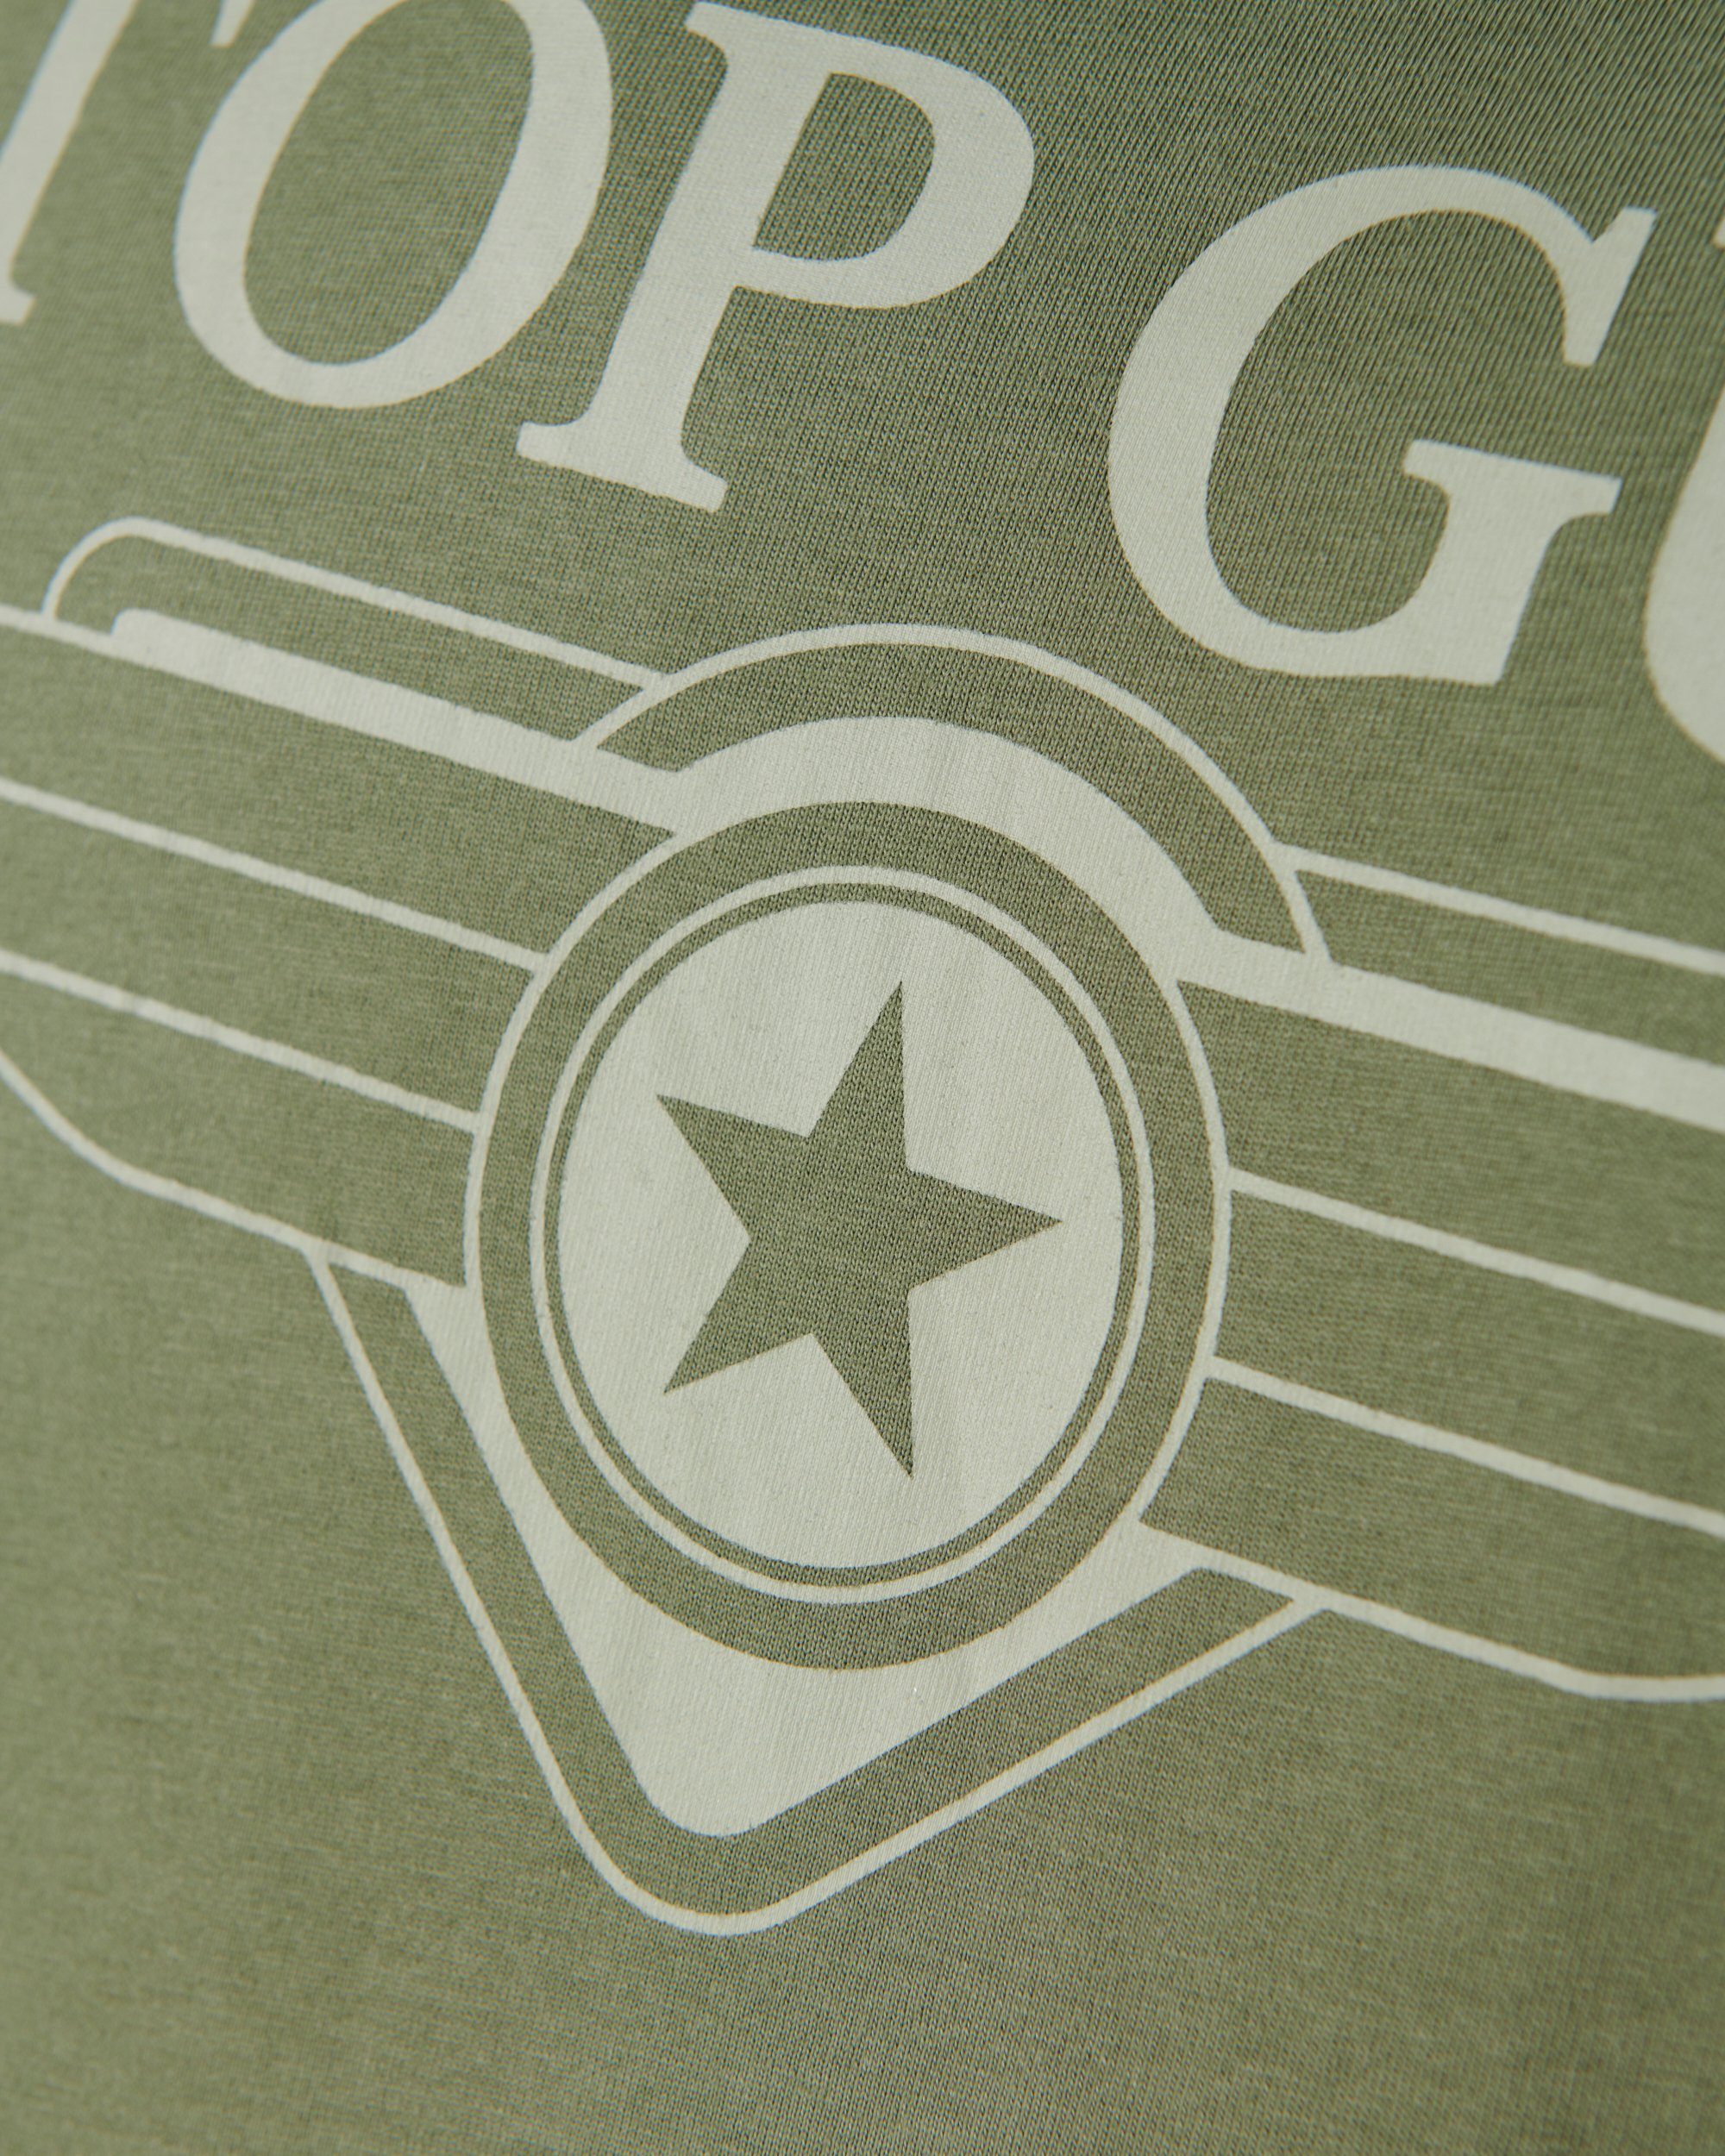 TOP olive GUN T-Shirt TG20201045